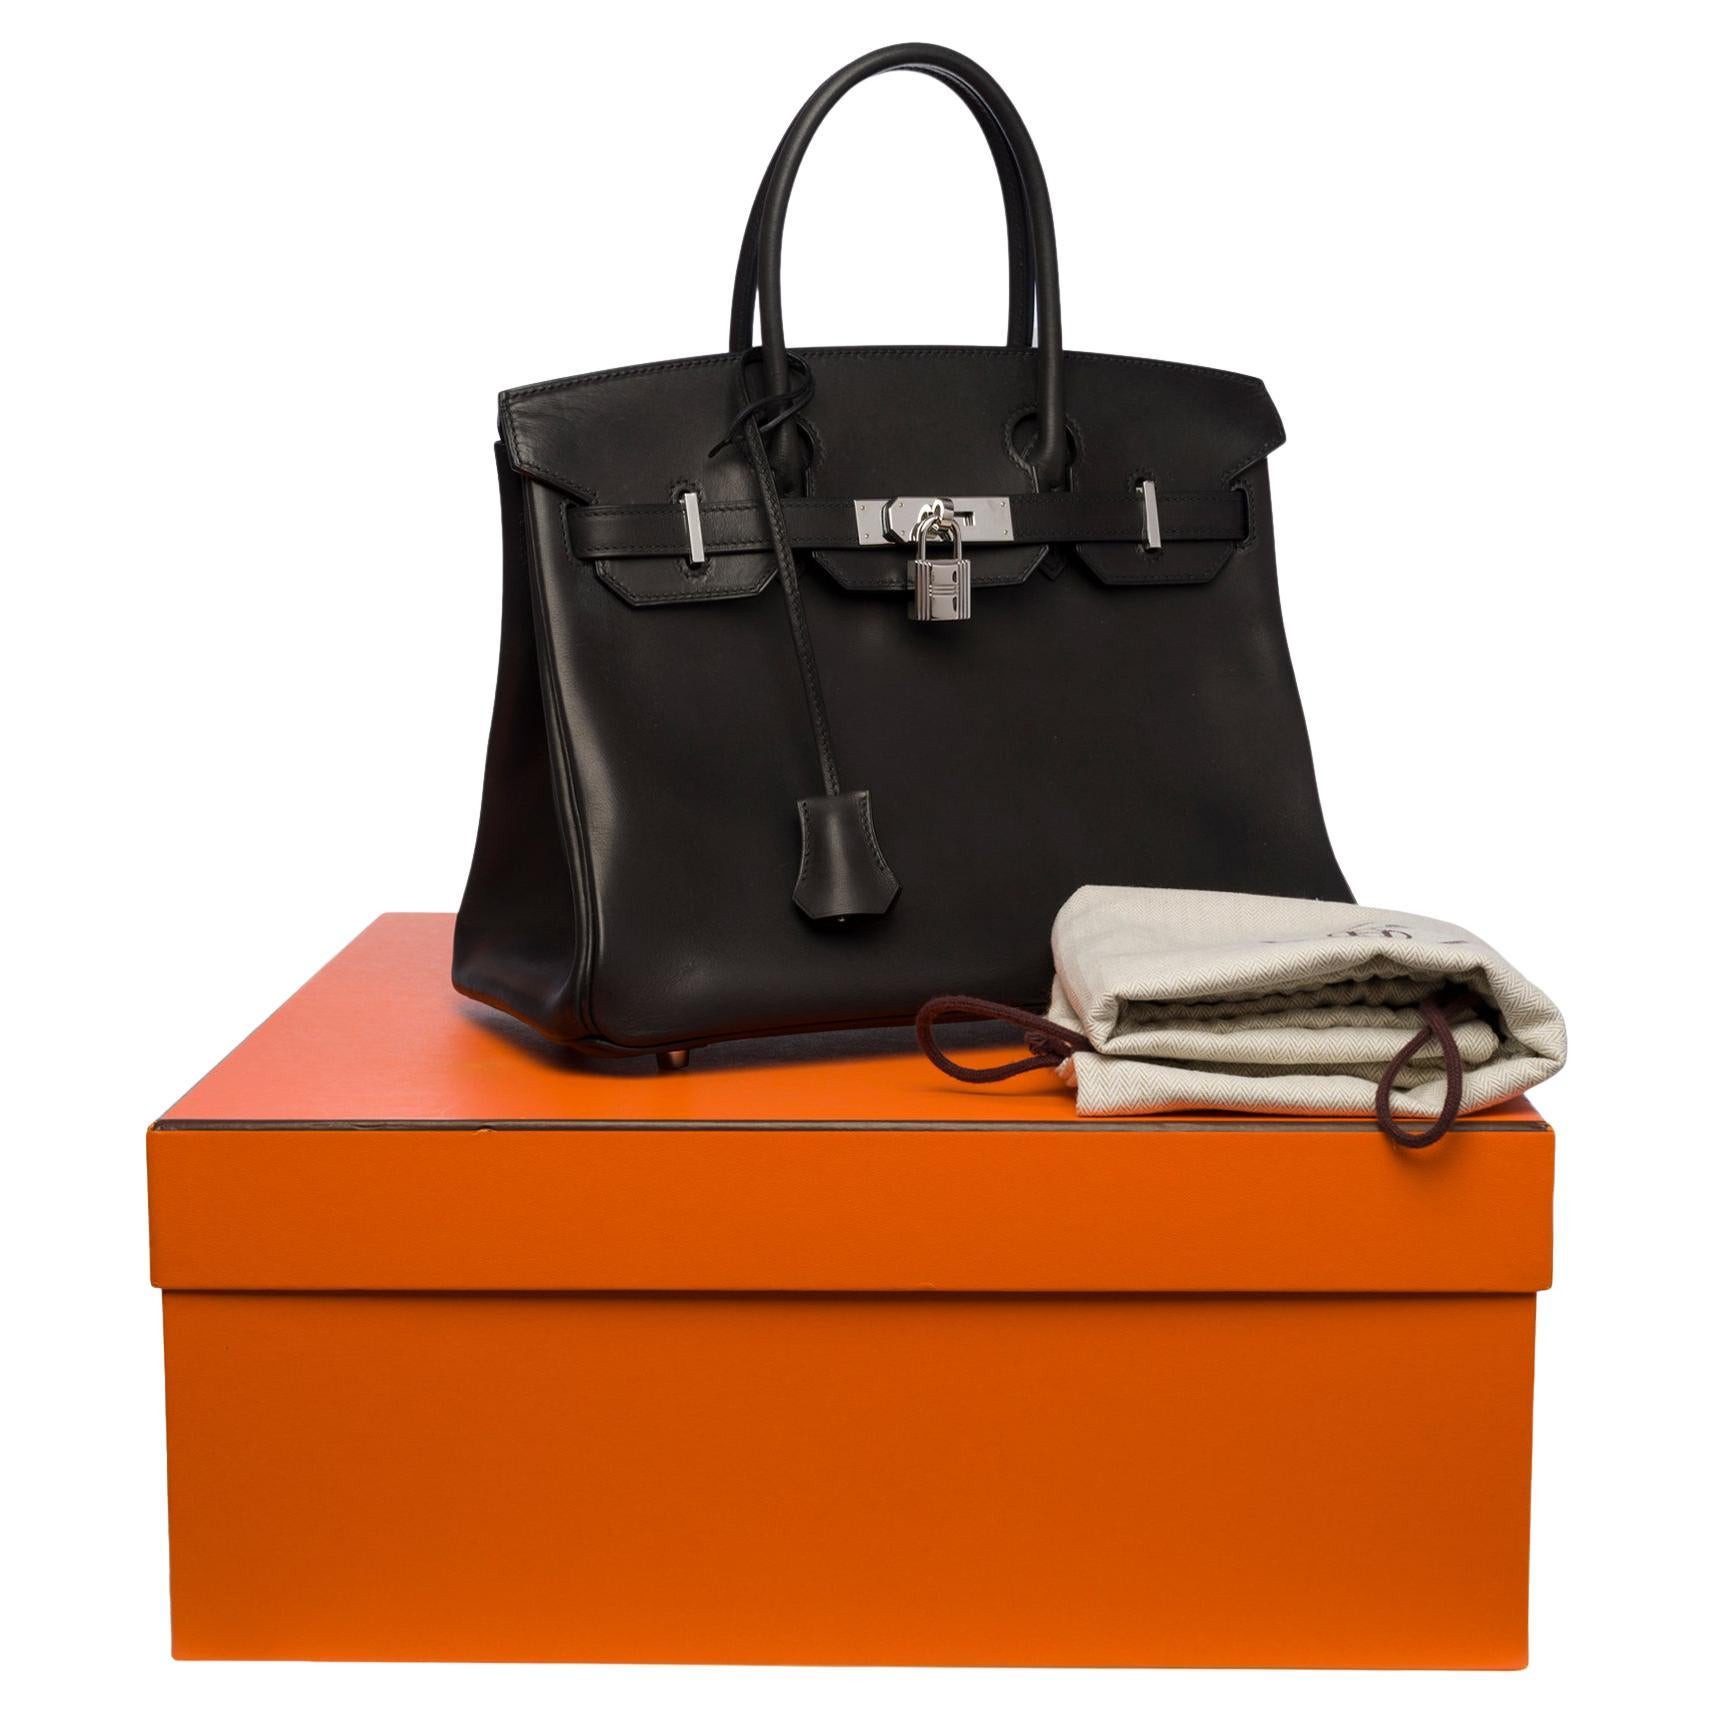 NEW - ULTRA RARE- Hermès Birkin 30 handbag in Black Barenia leather , SHW